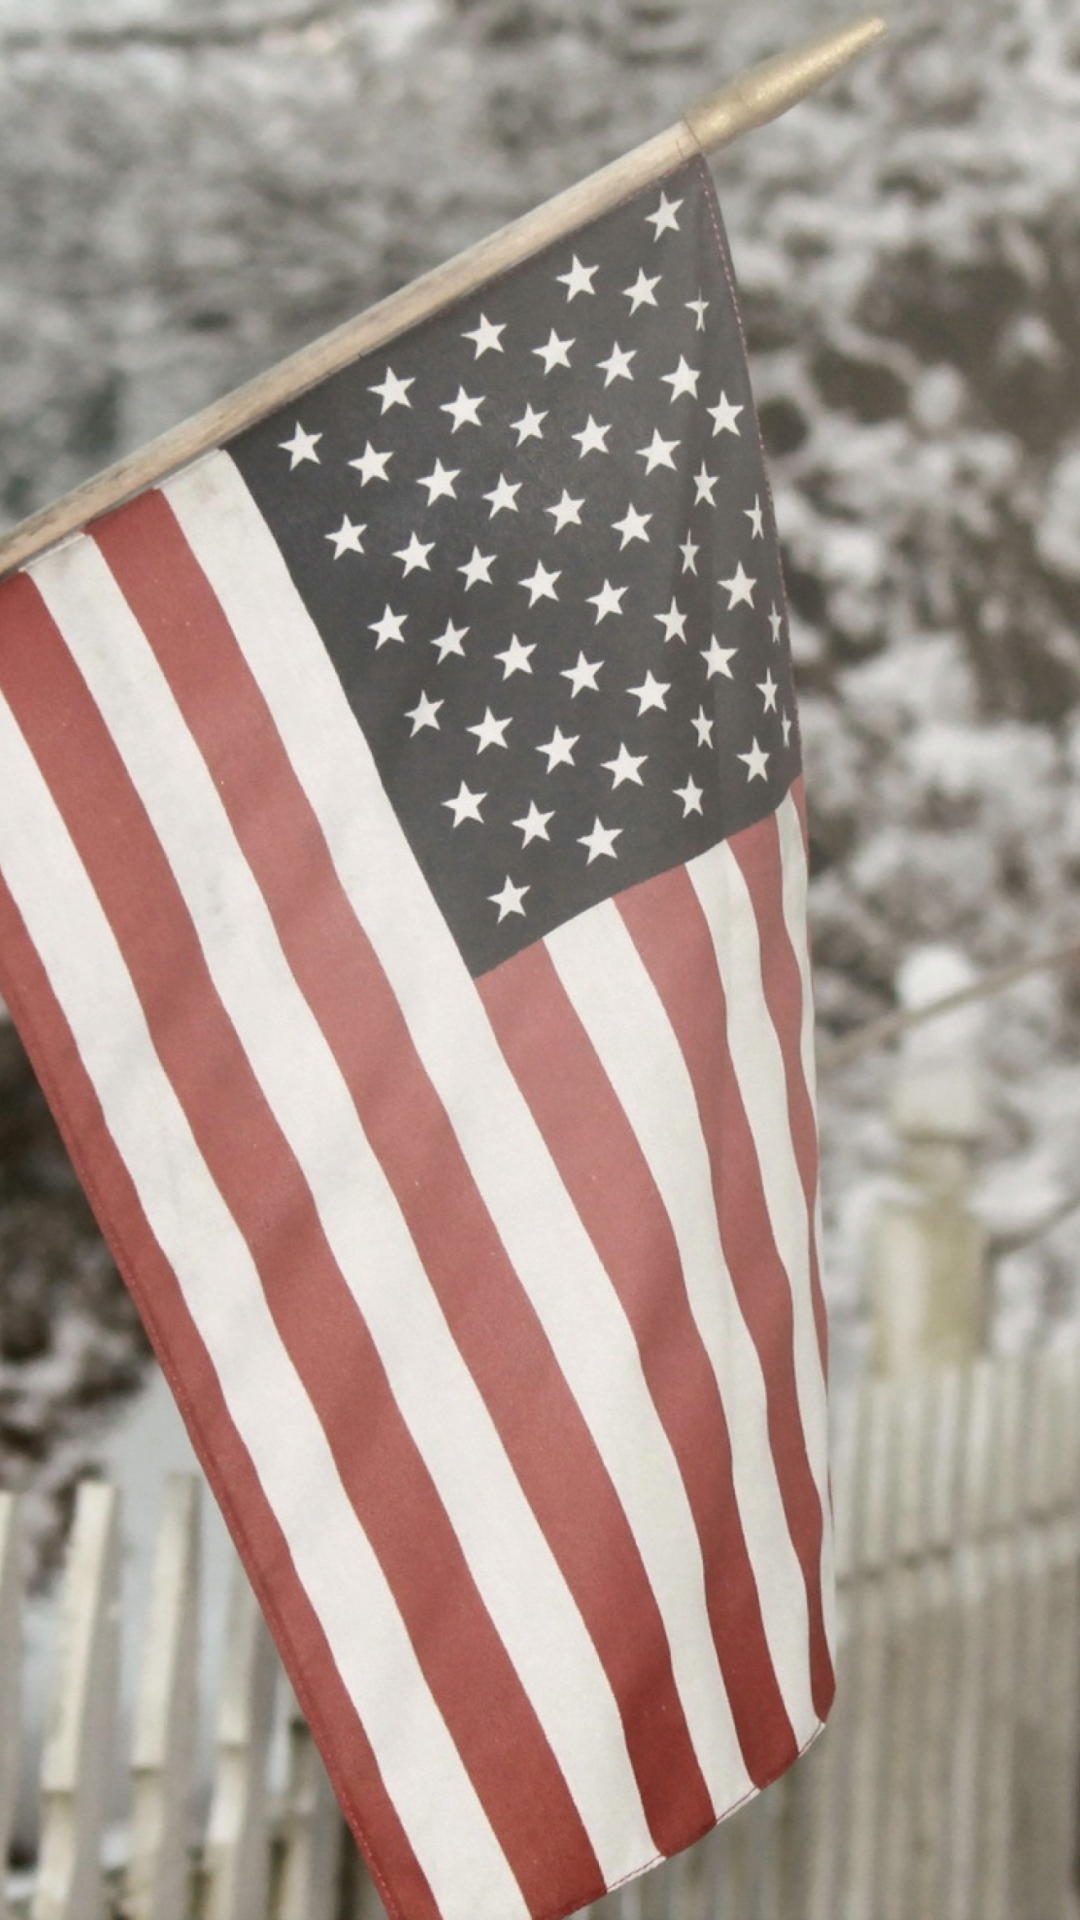 Free Download American Flag Iphone Backgrounds | PixelsTalk.Net